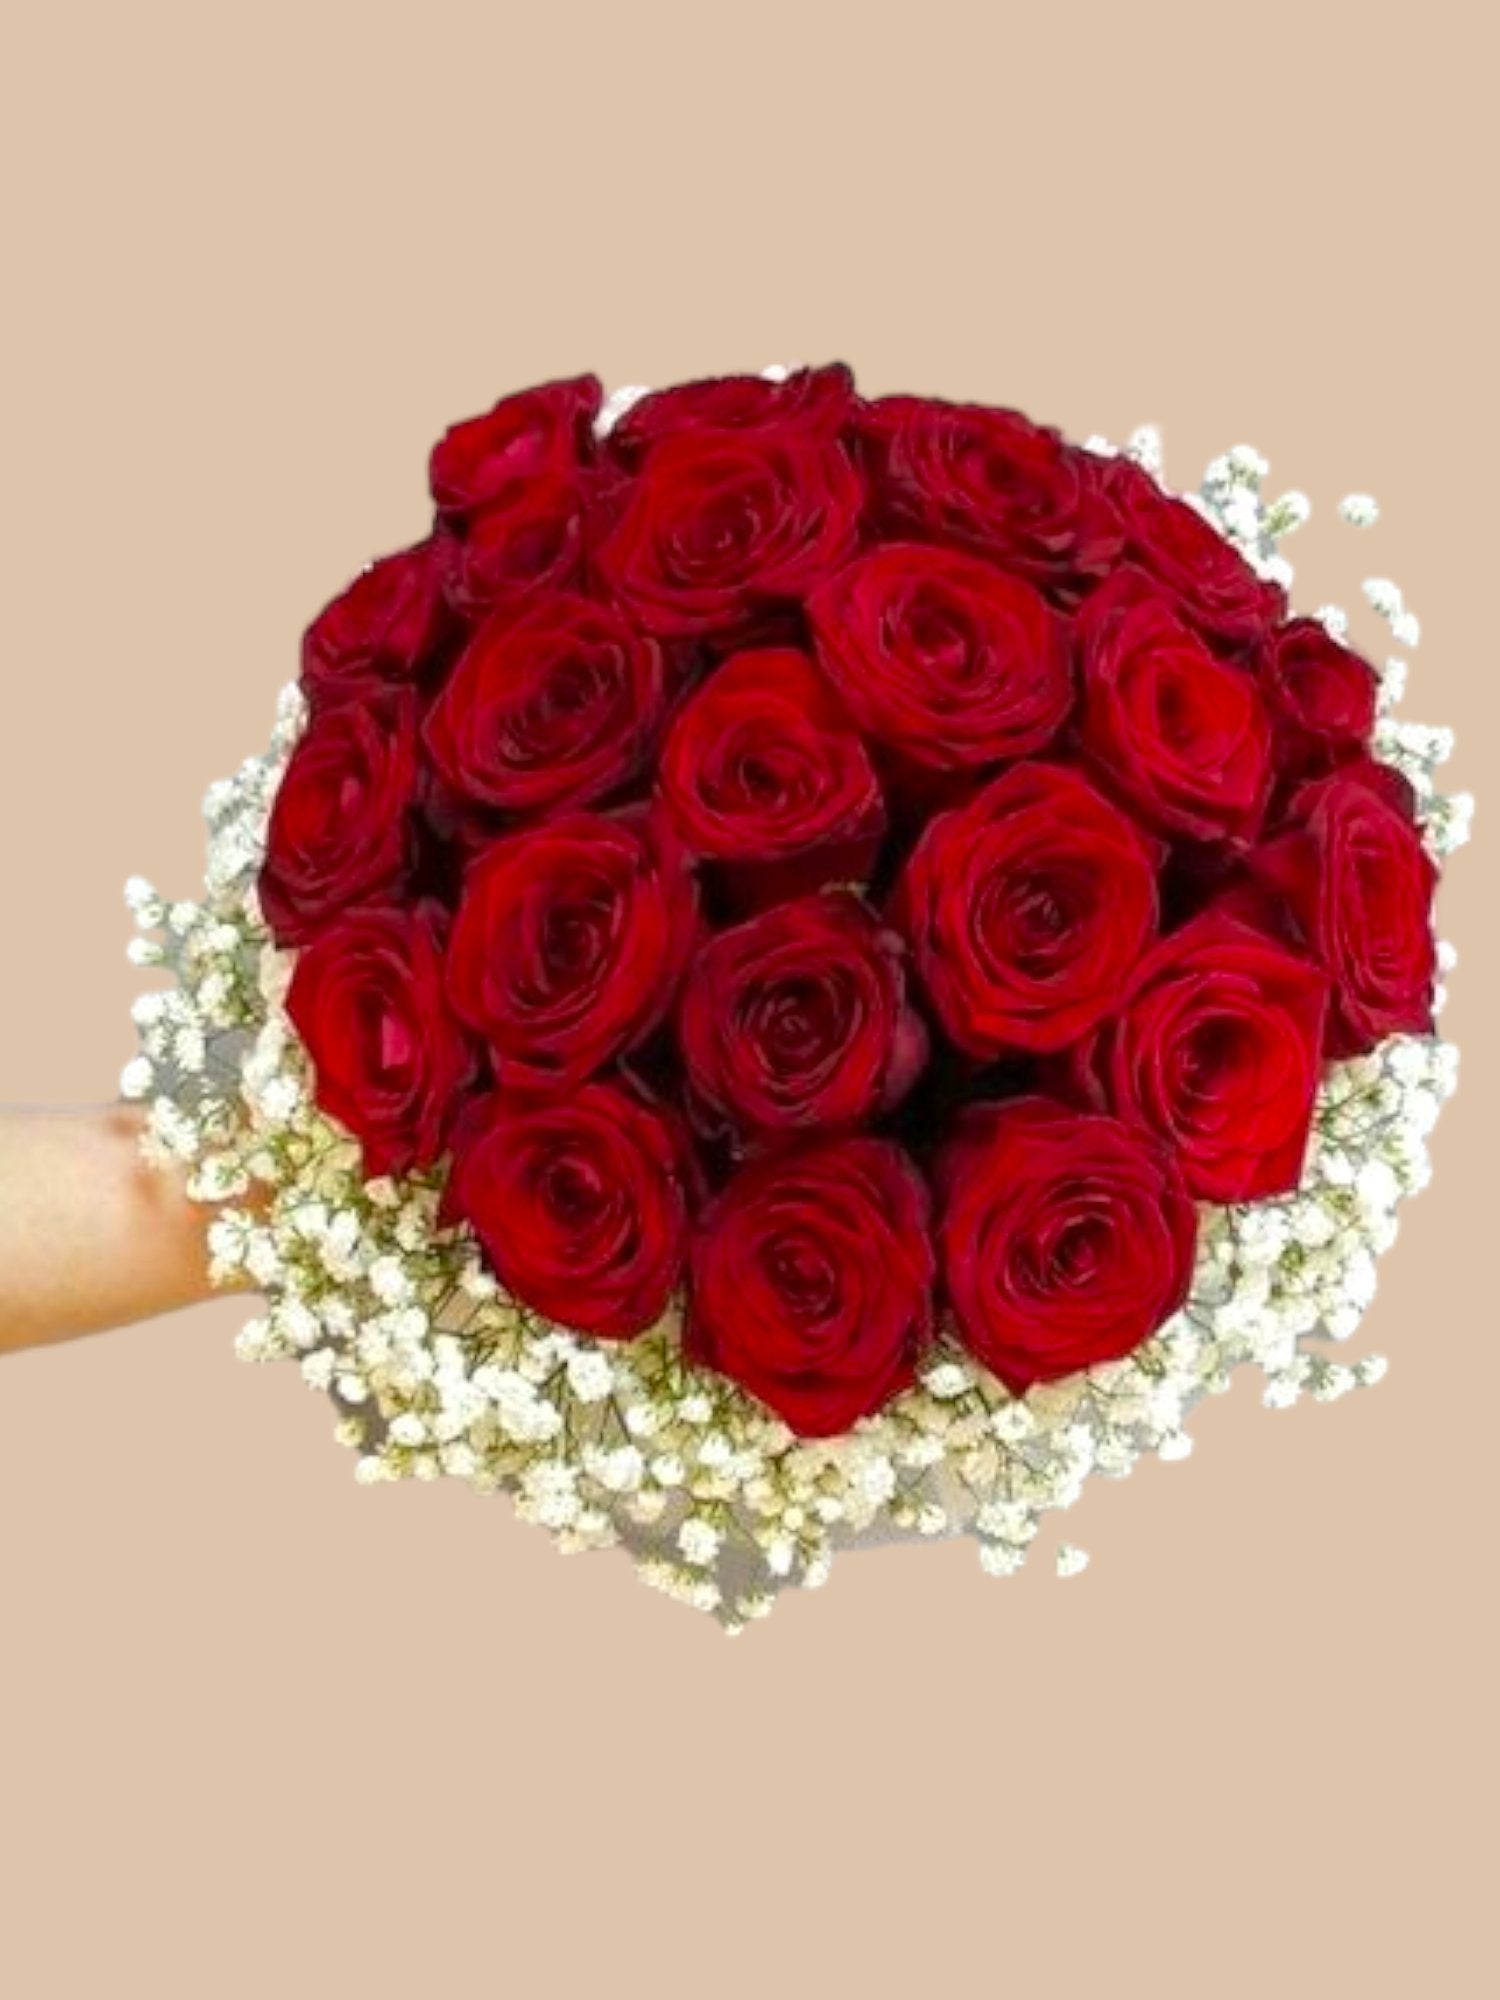 My Romance - HW Flowers